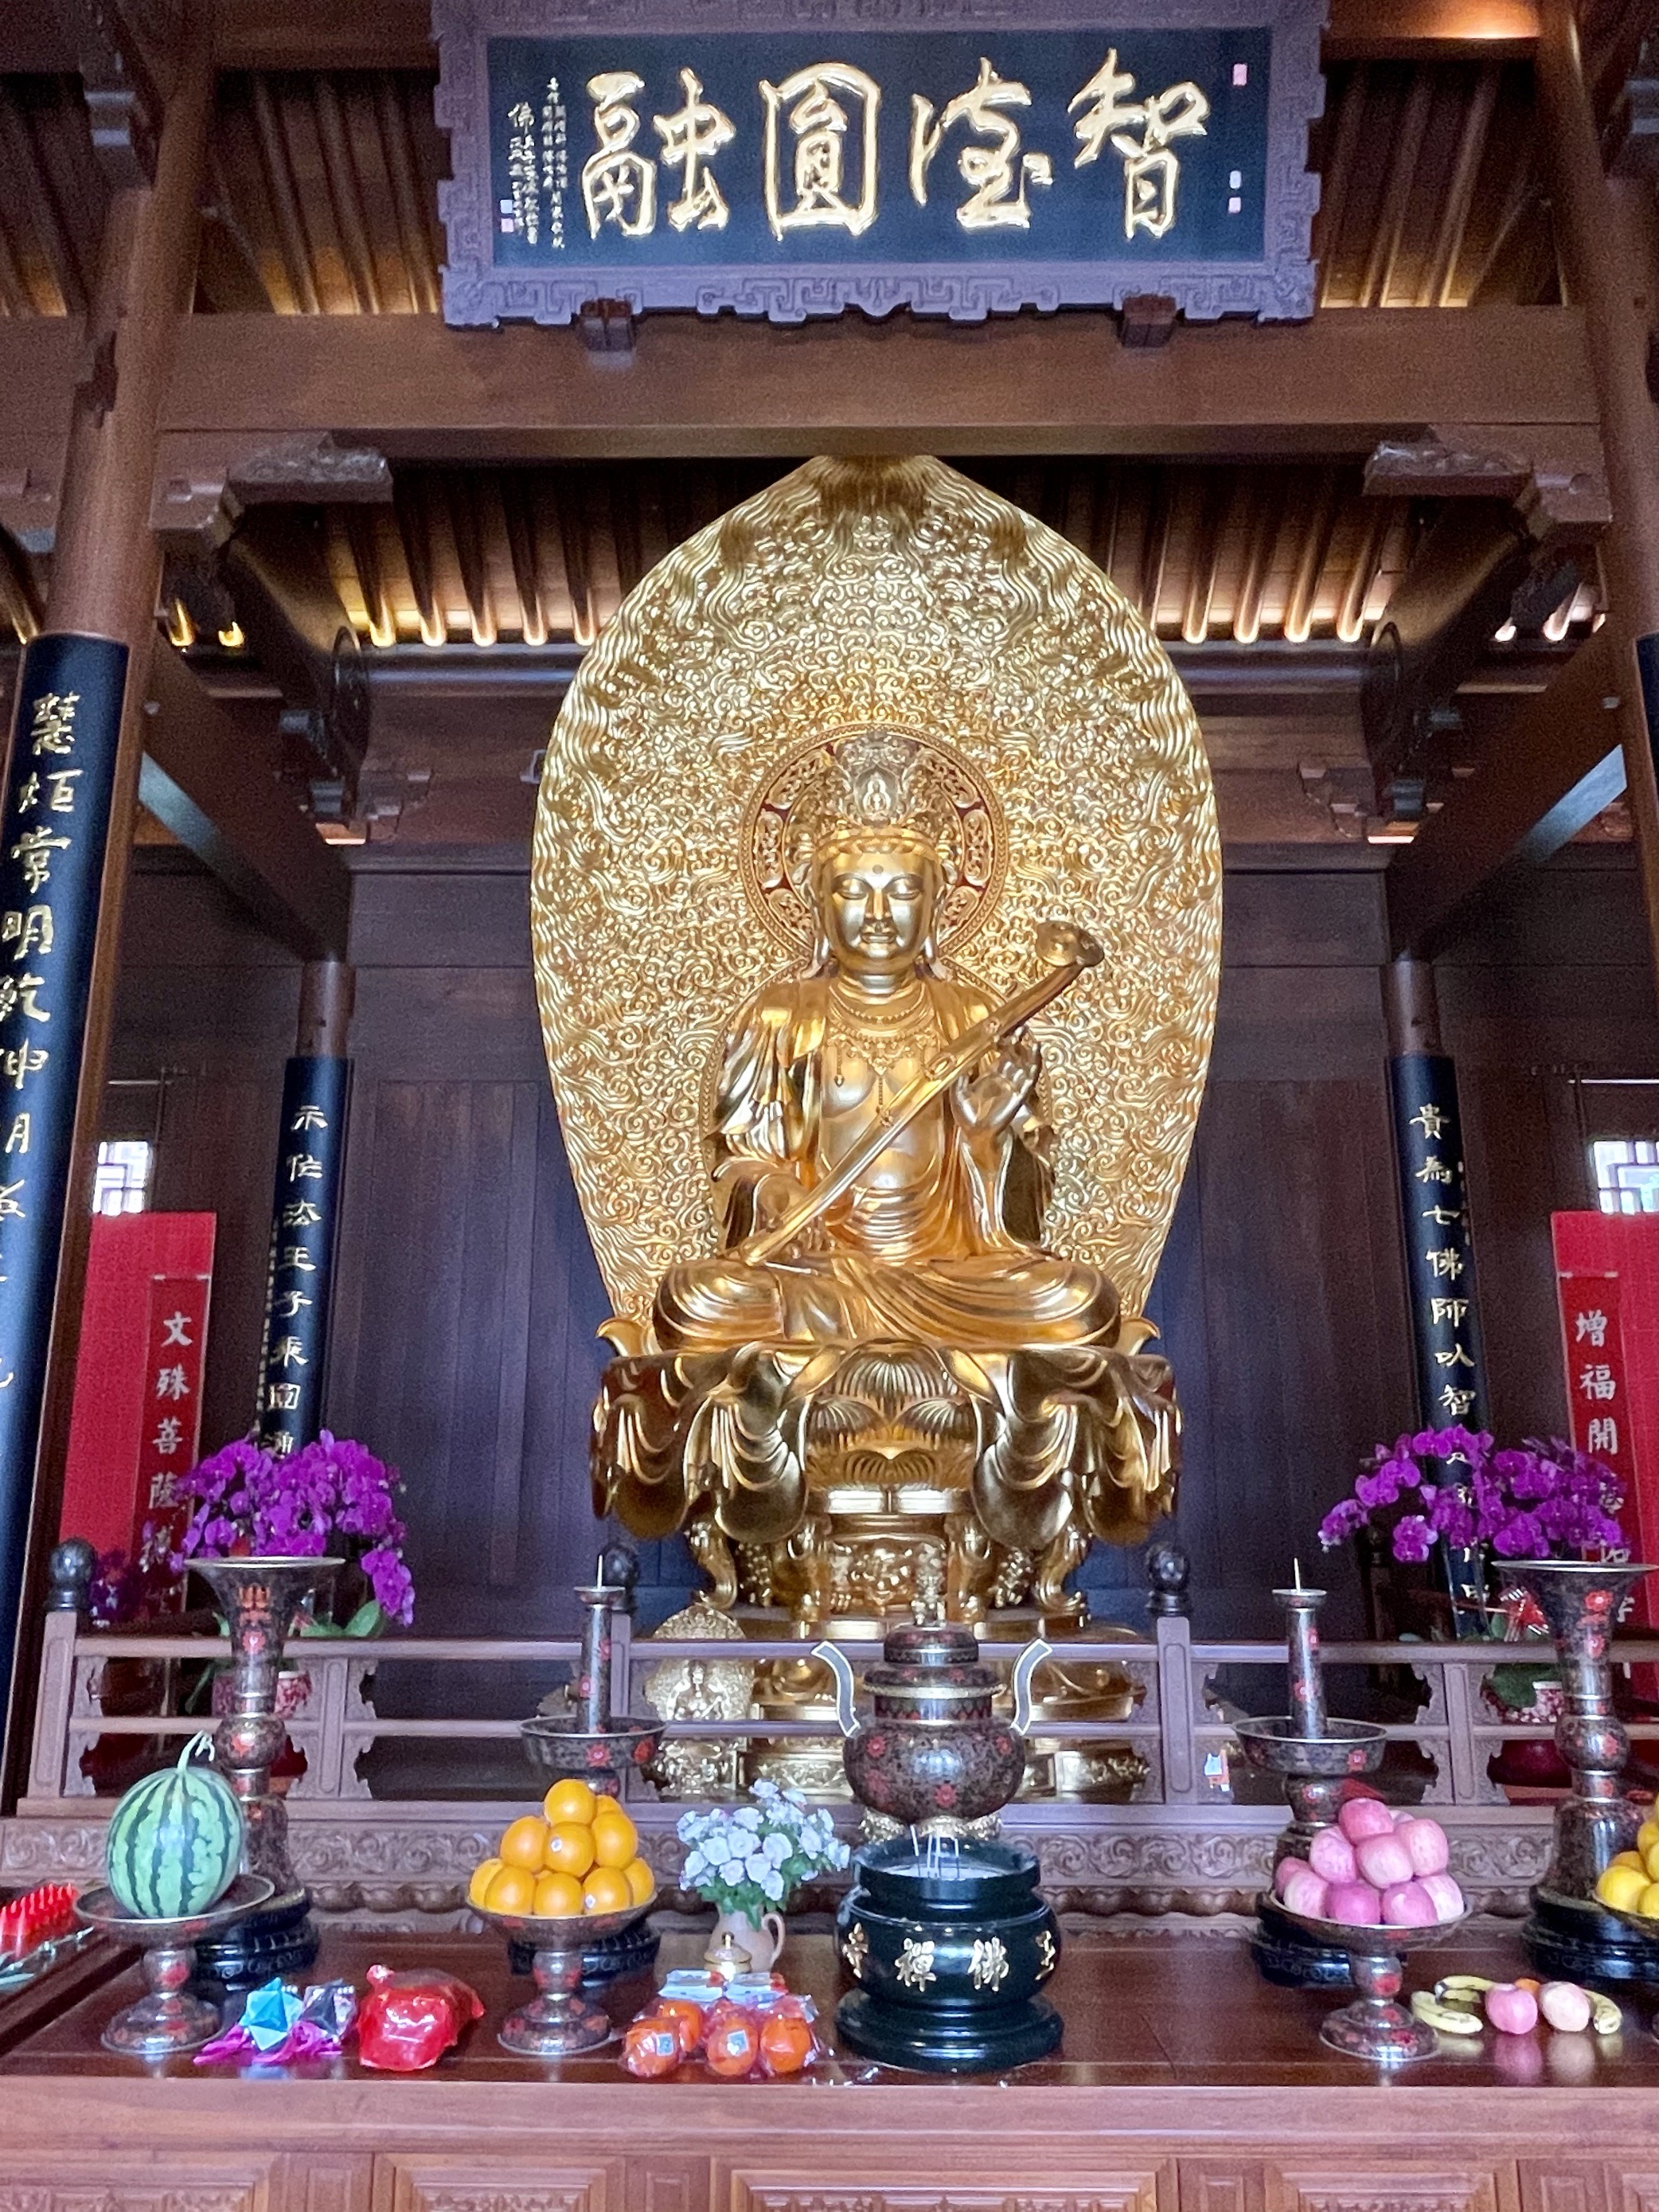 ShangHai Jade Buddha Temple